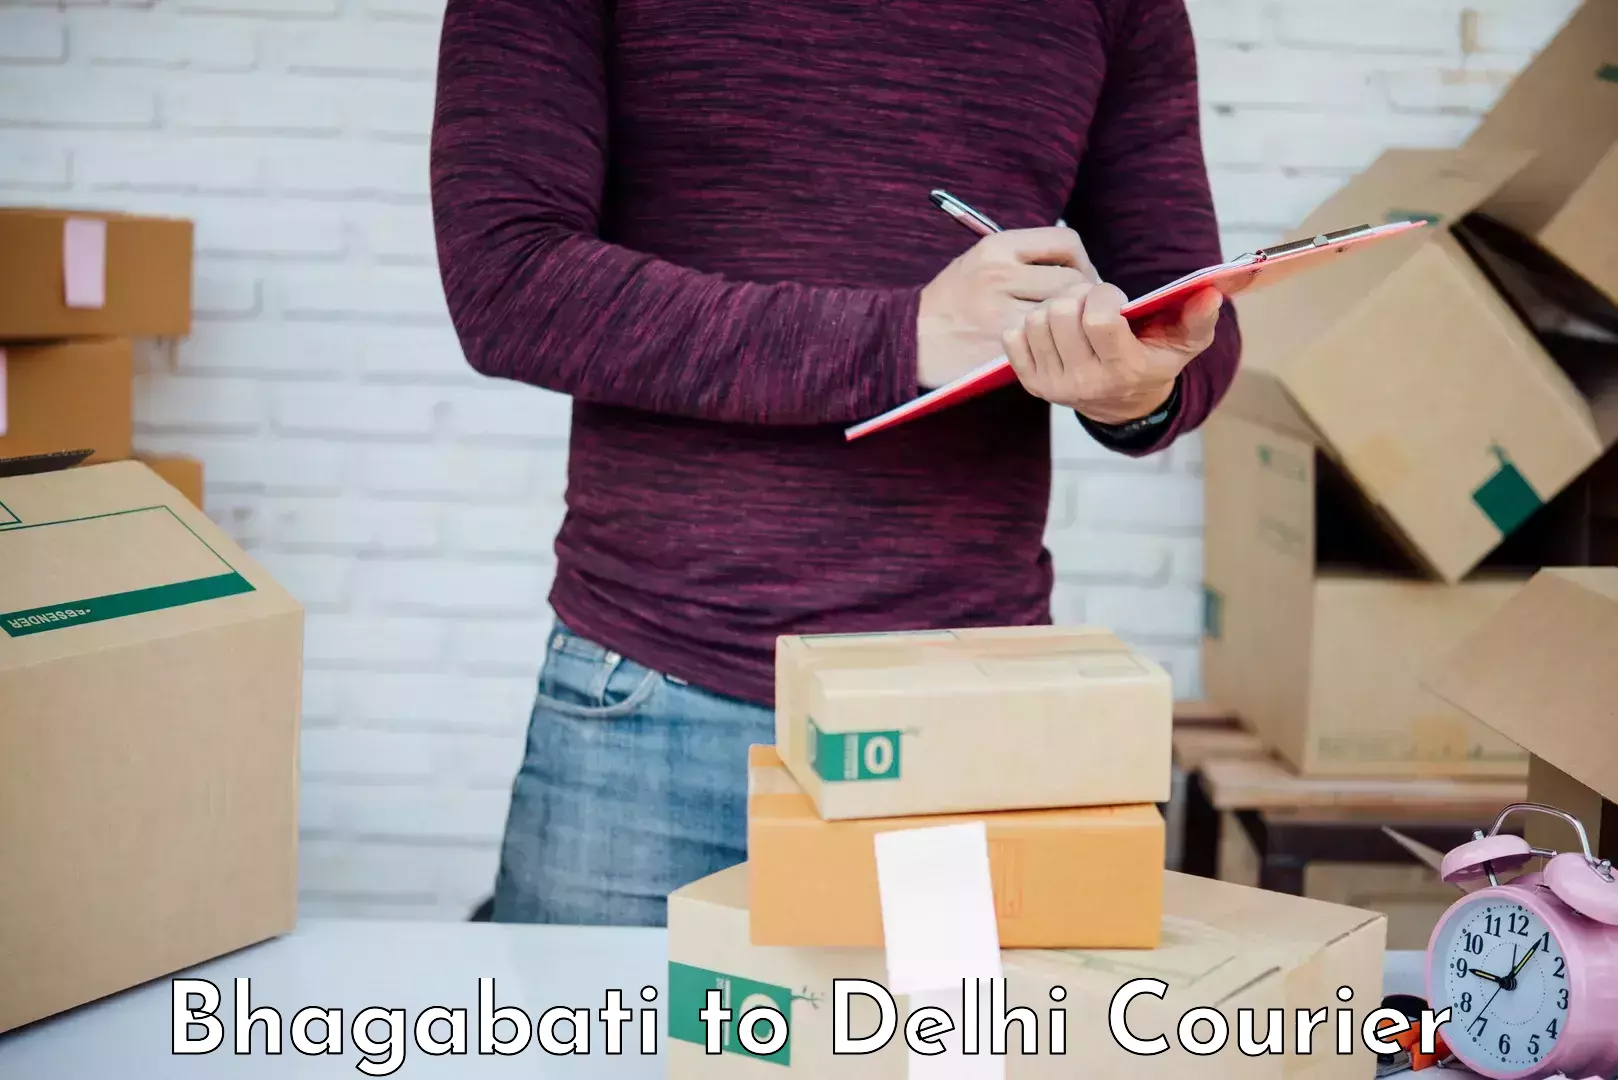 Furniture moving specialists Bhagabati to East Delhi